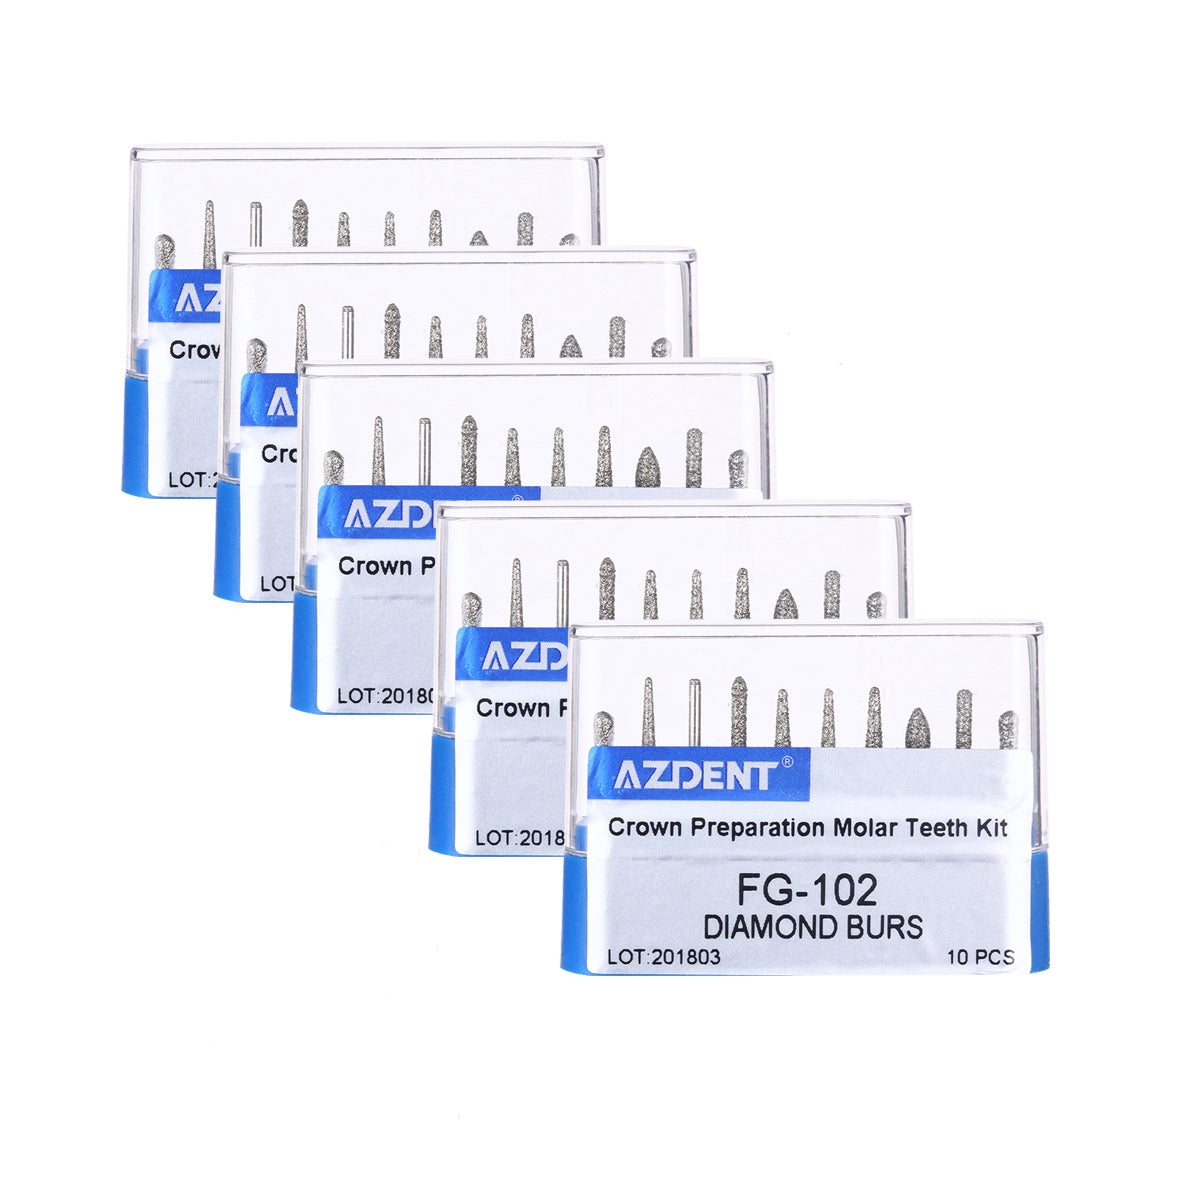 5 Kits AZDENT Dental Diamond Bur FG-102 Crown Preparation Molar Teeth Kit 10pcs/Kit - azdentall.com